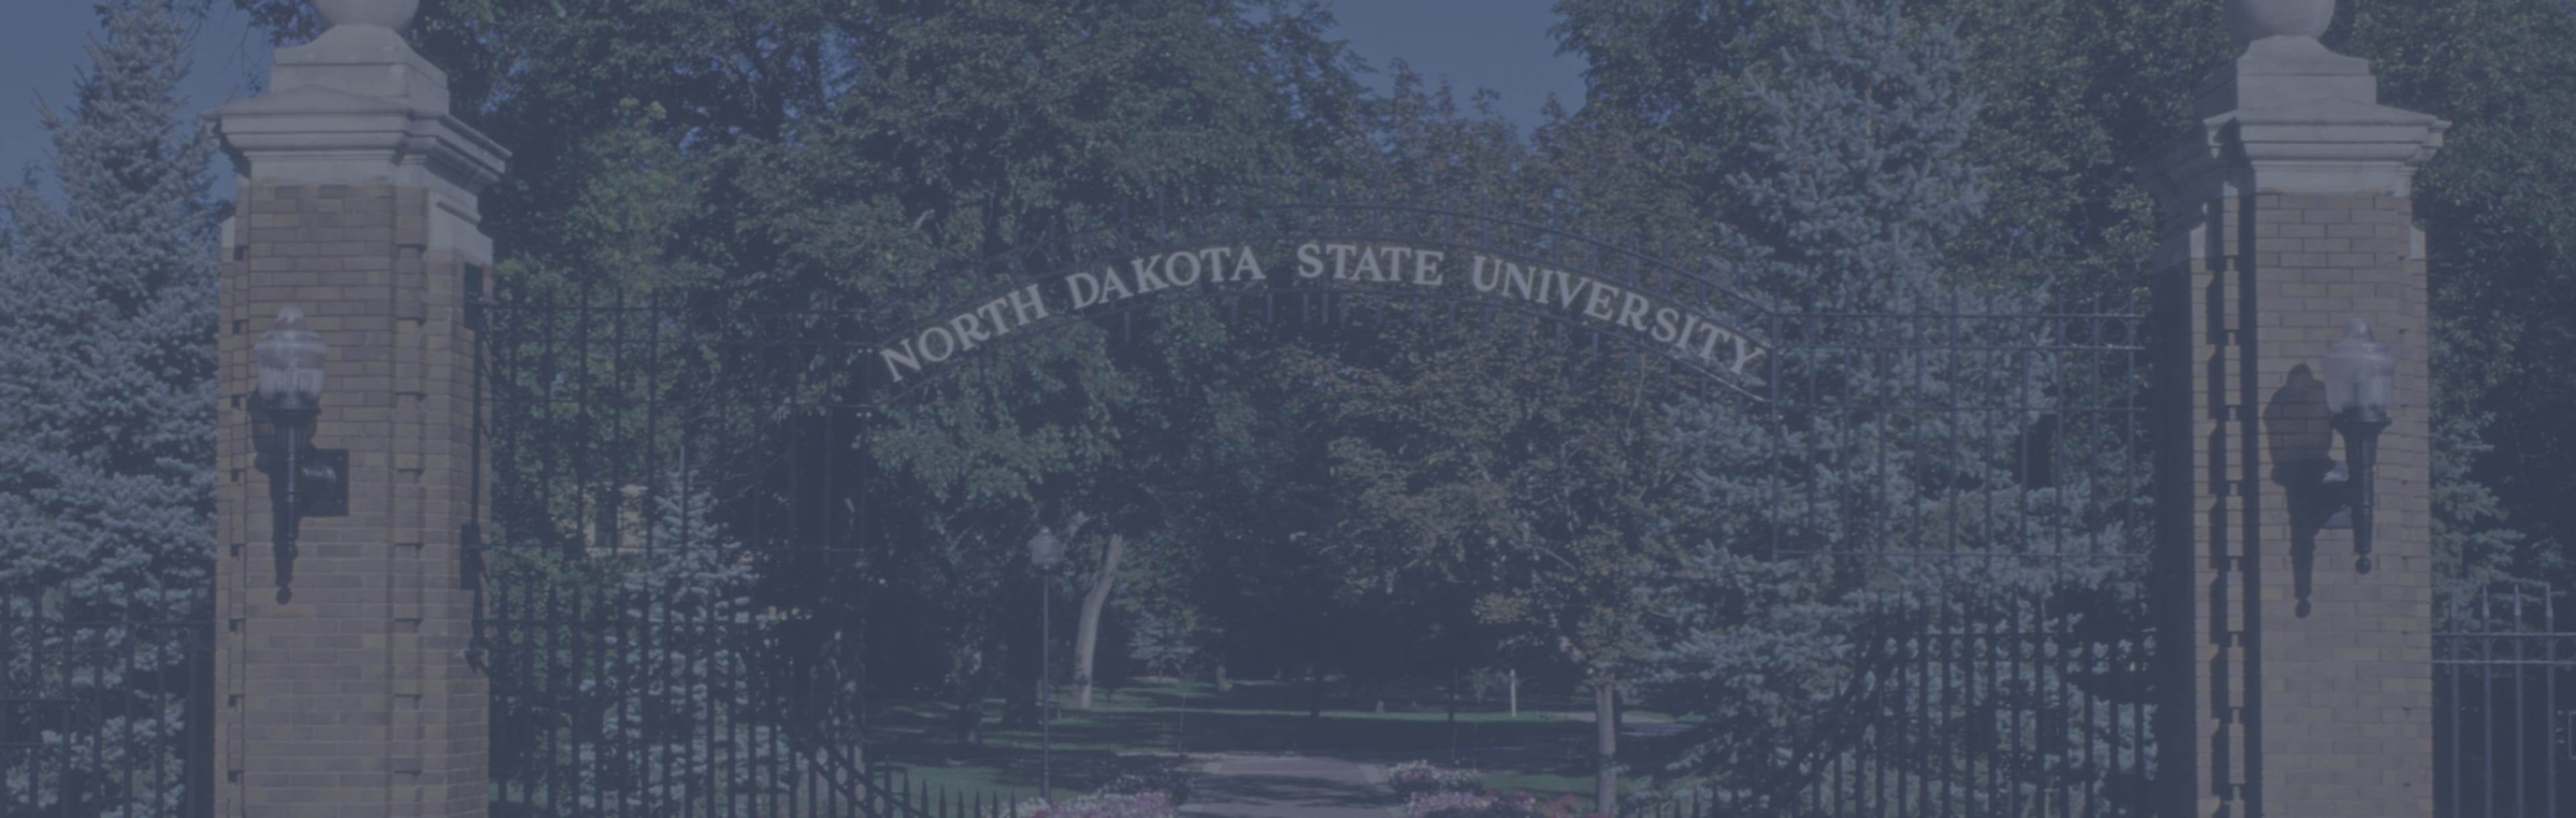 North Dakota State University - Graduate School Ph.D. in Coatings & Polymeric Materials